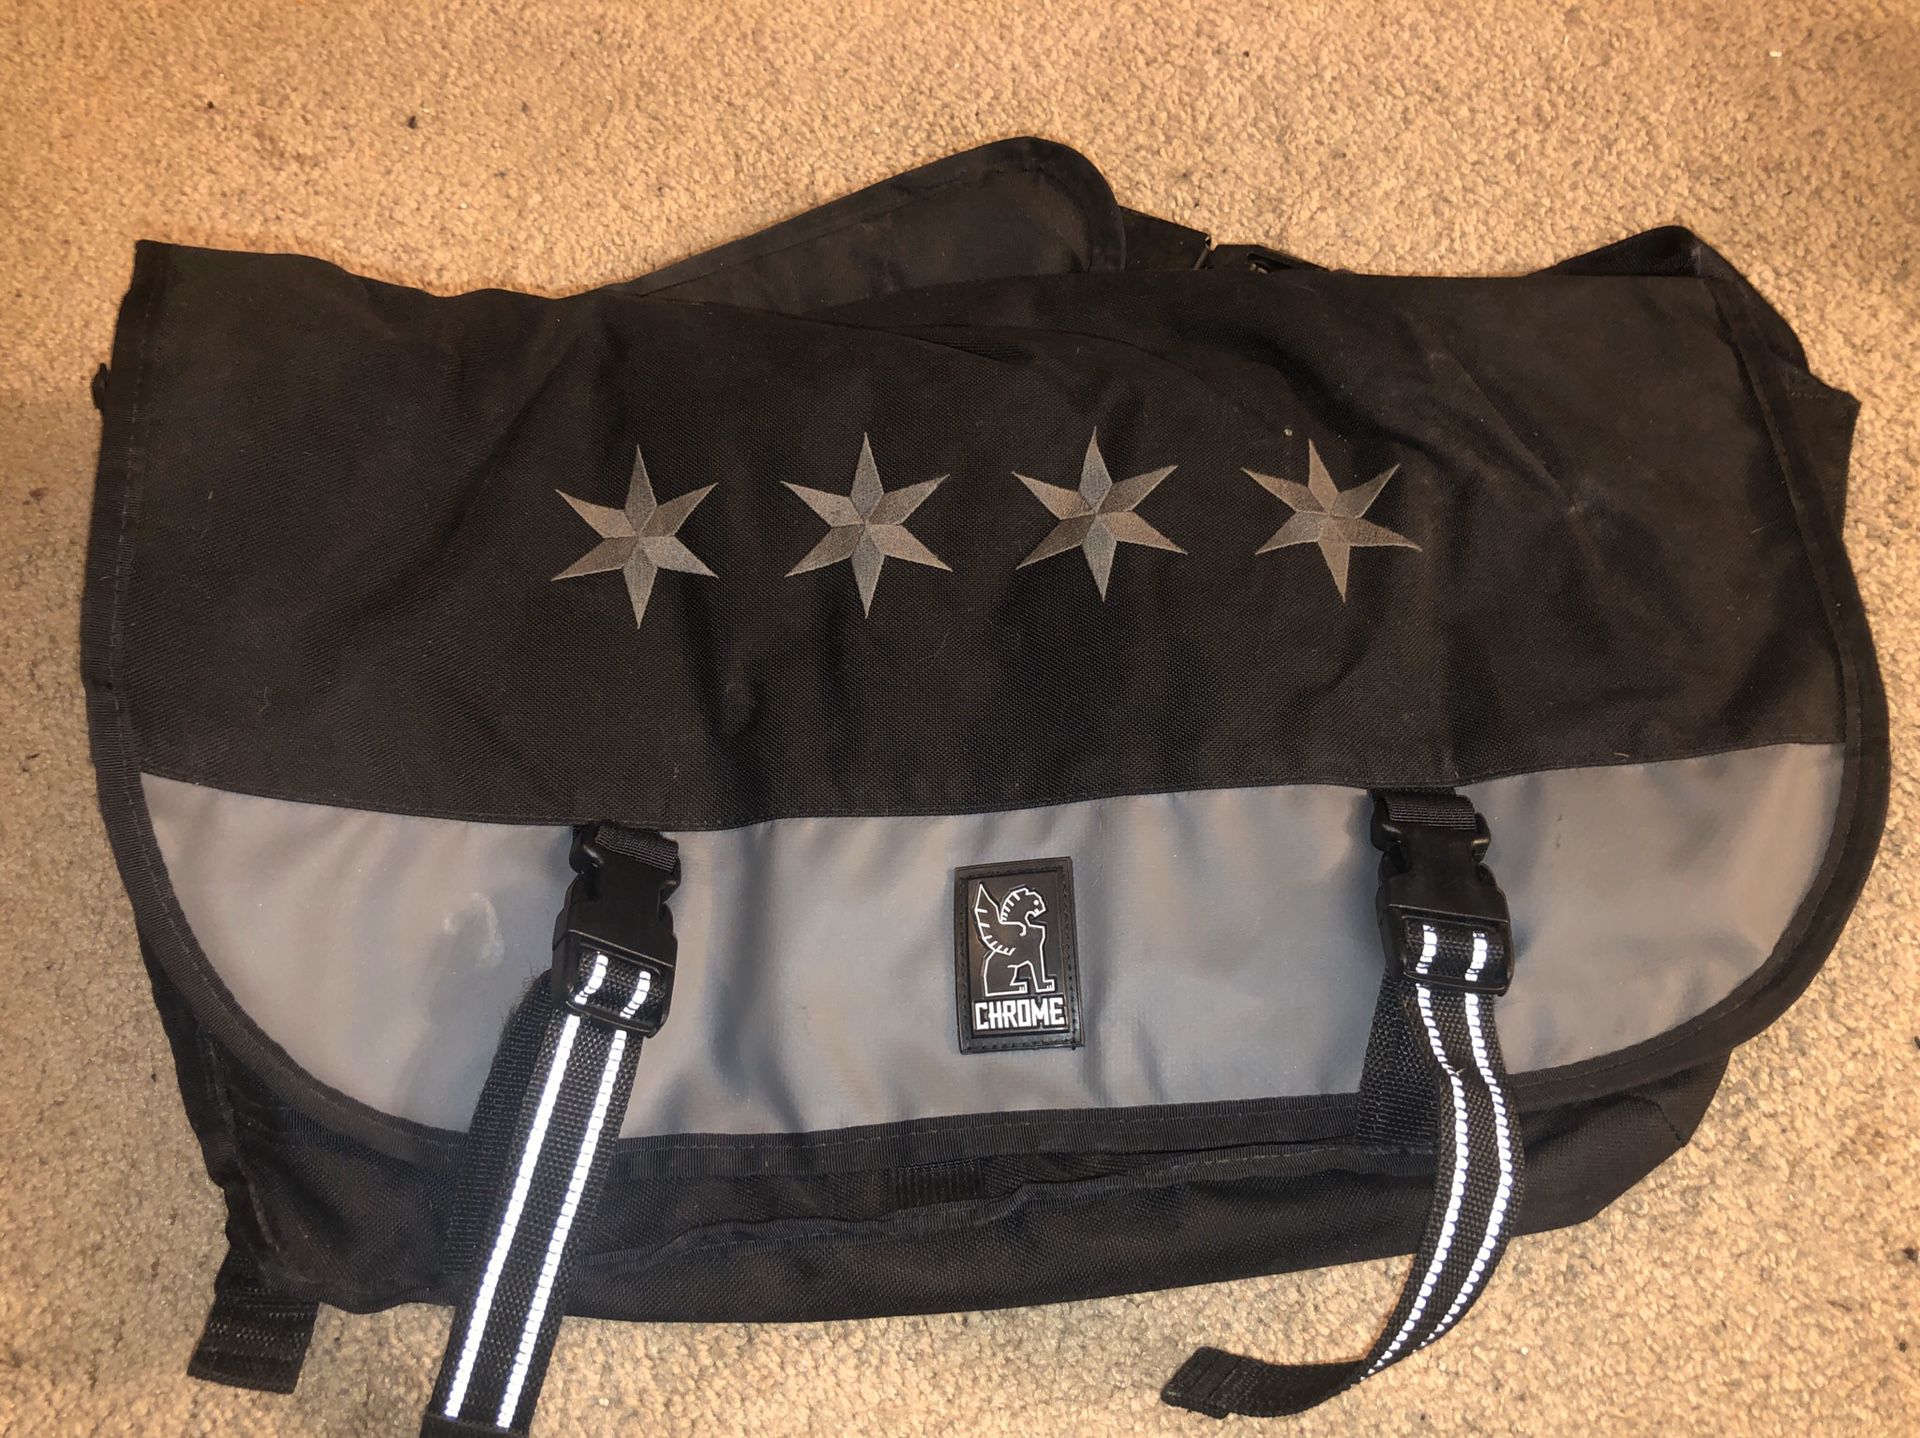 Limited Edition Chicago Chrome Bag for Sale in Des Plaines, IL